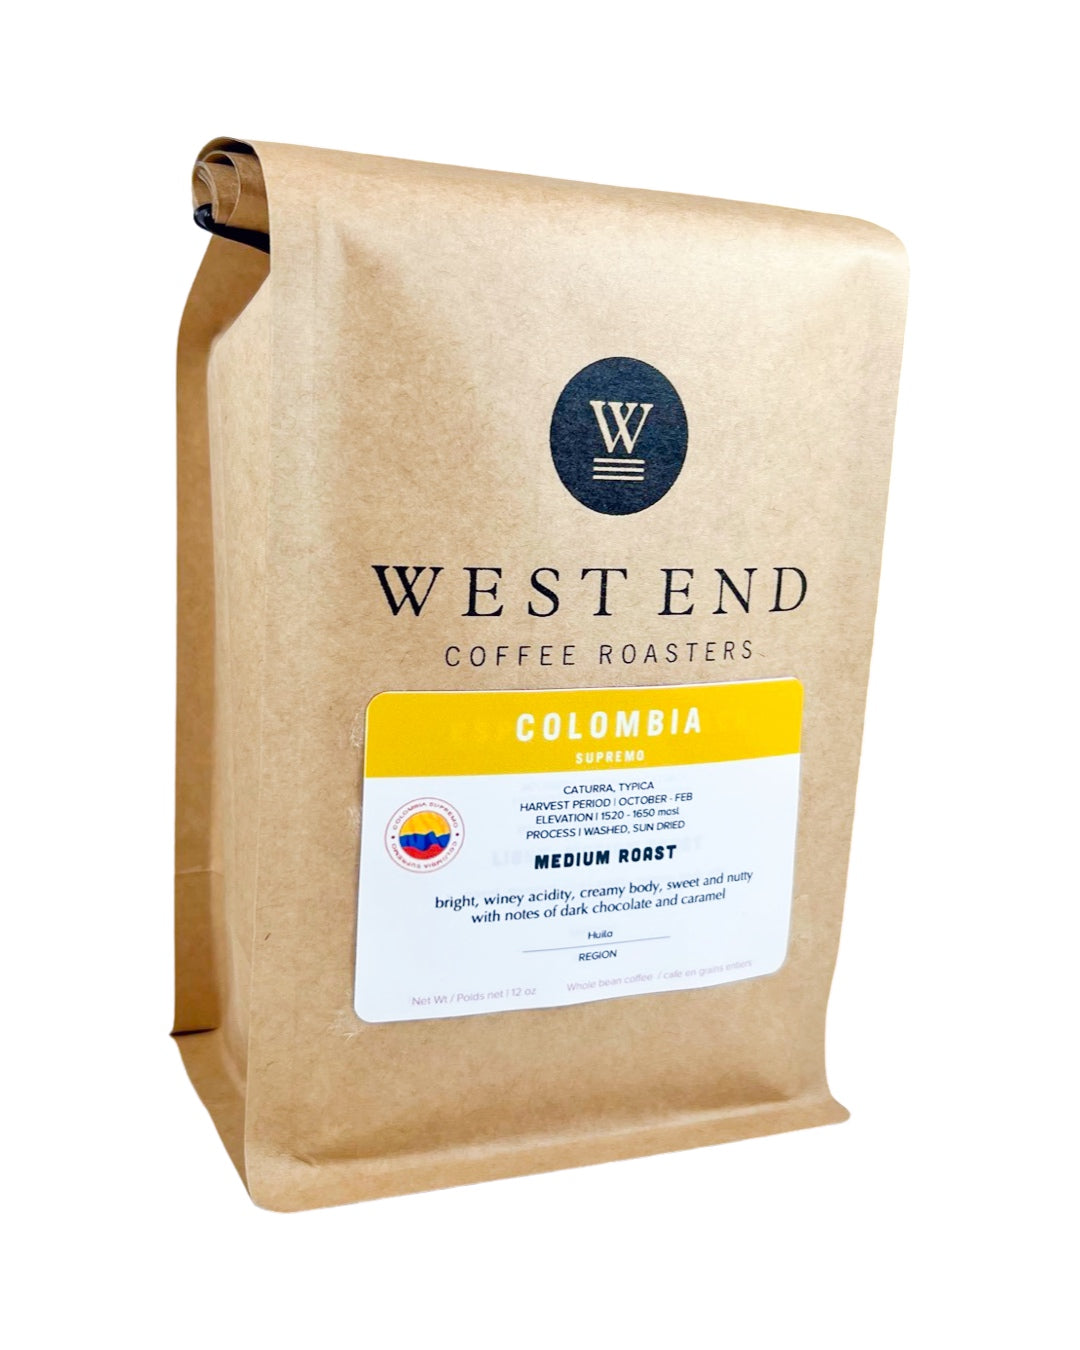 Colombia Supremo - medium roast - West End Coffee Roasters